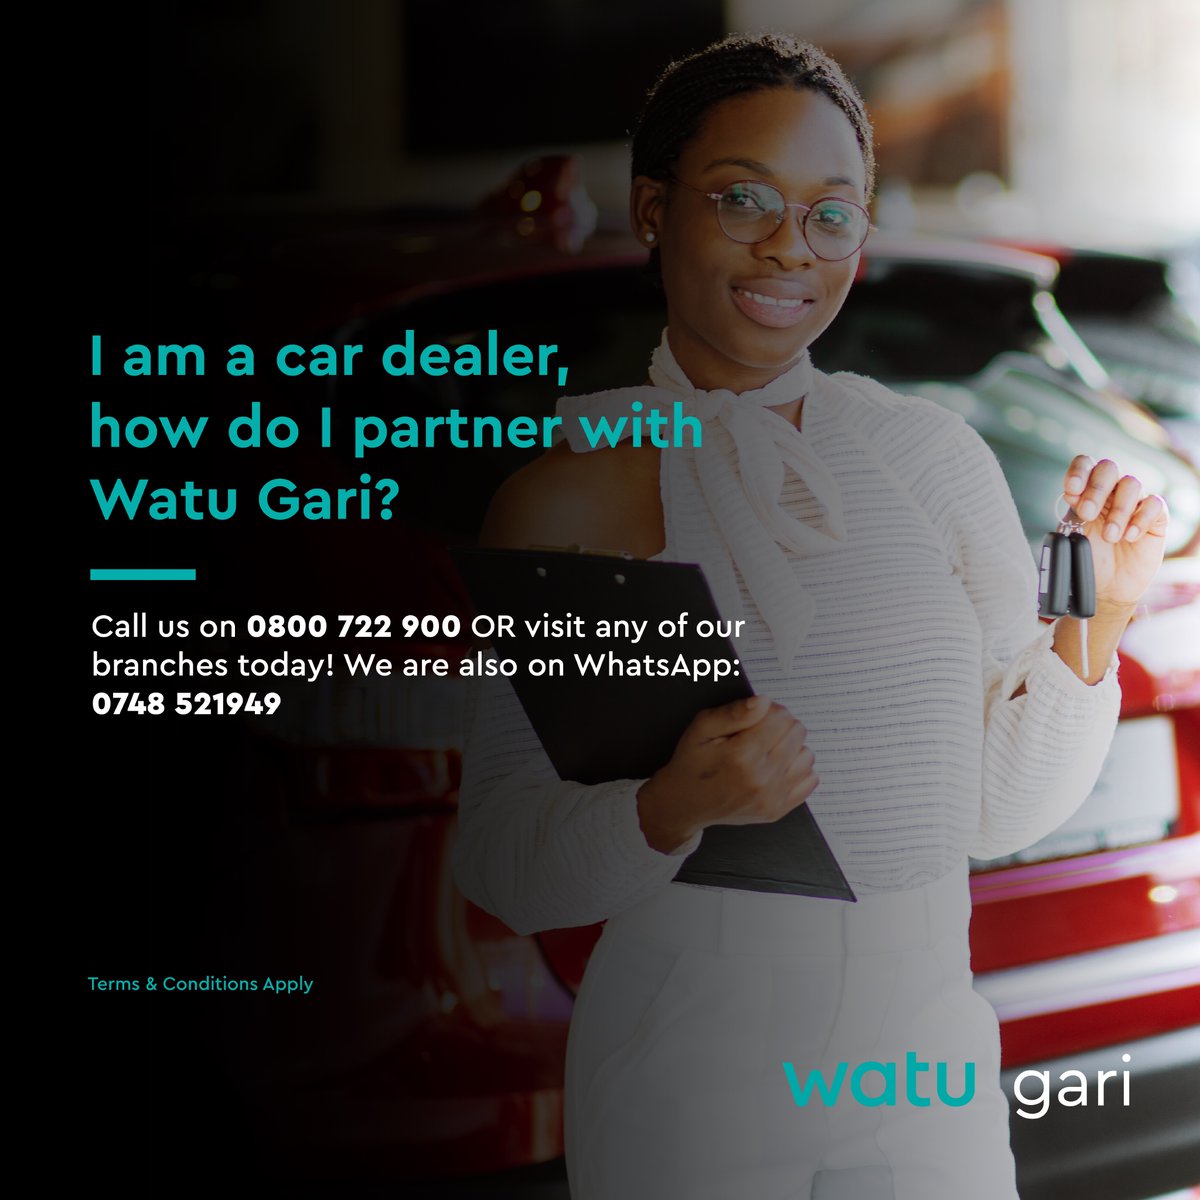 Would you like to be a Watu Gari partner?

Call us on 0800 722 900 OR visit us at #NgongRoad OR #KiambuRoad to apply today!

Apply online: watugari.co.ke
We are on WhatsApp: 0748 521949

#DriveNdotoZako with Watu Gari's car financing.